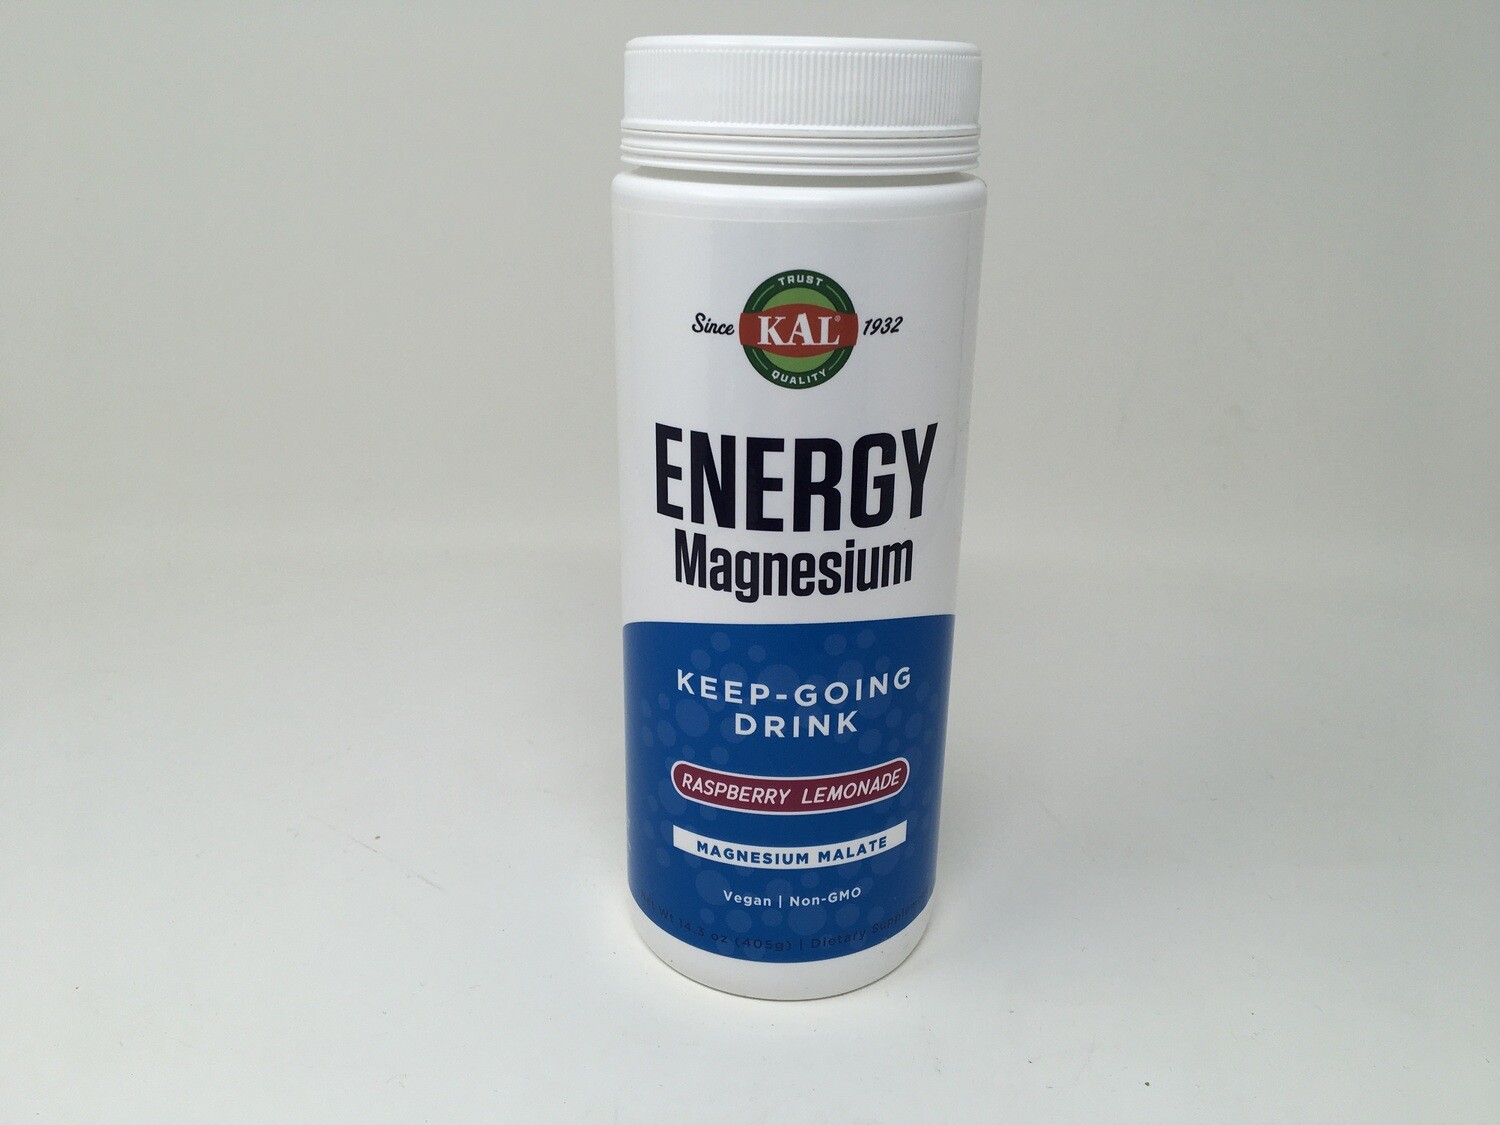 Energy Magnesium Malate Rasp/Lemon 14.3 oz (KAL)